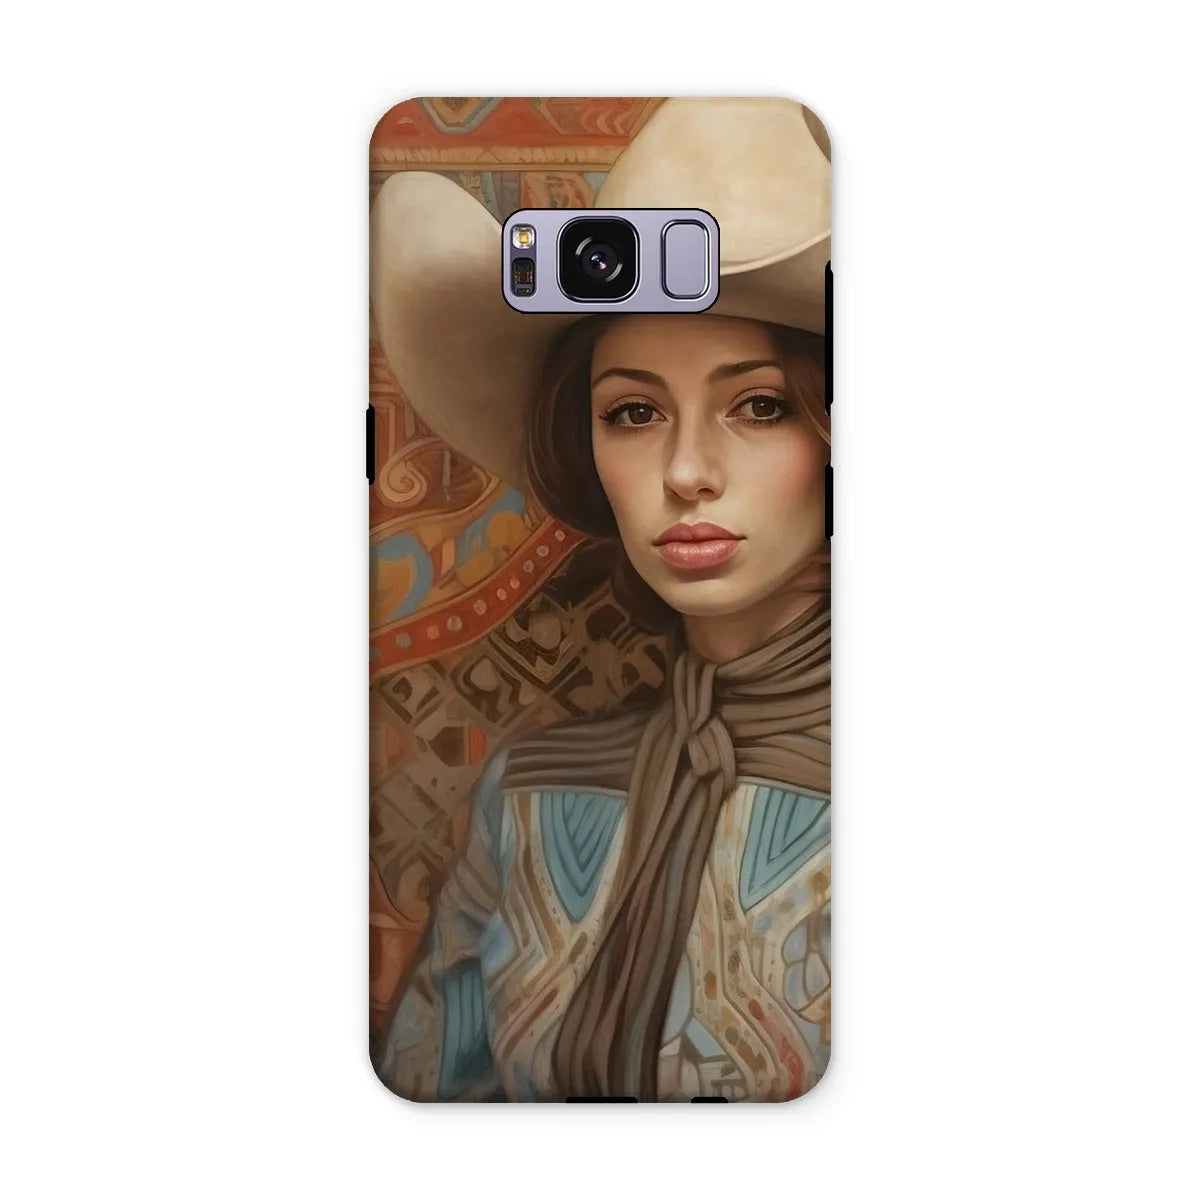 Anahita The Lesbian Cowgirl - Sapphic Art Phone Case - Samsung Galaxy S8 Plus / Matte - Mobile Phone Cases - Aesthetic